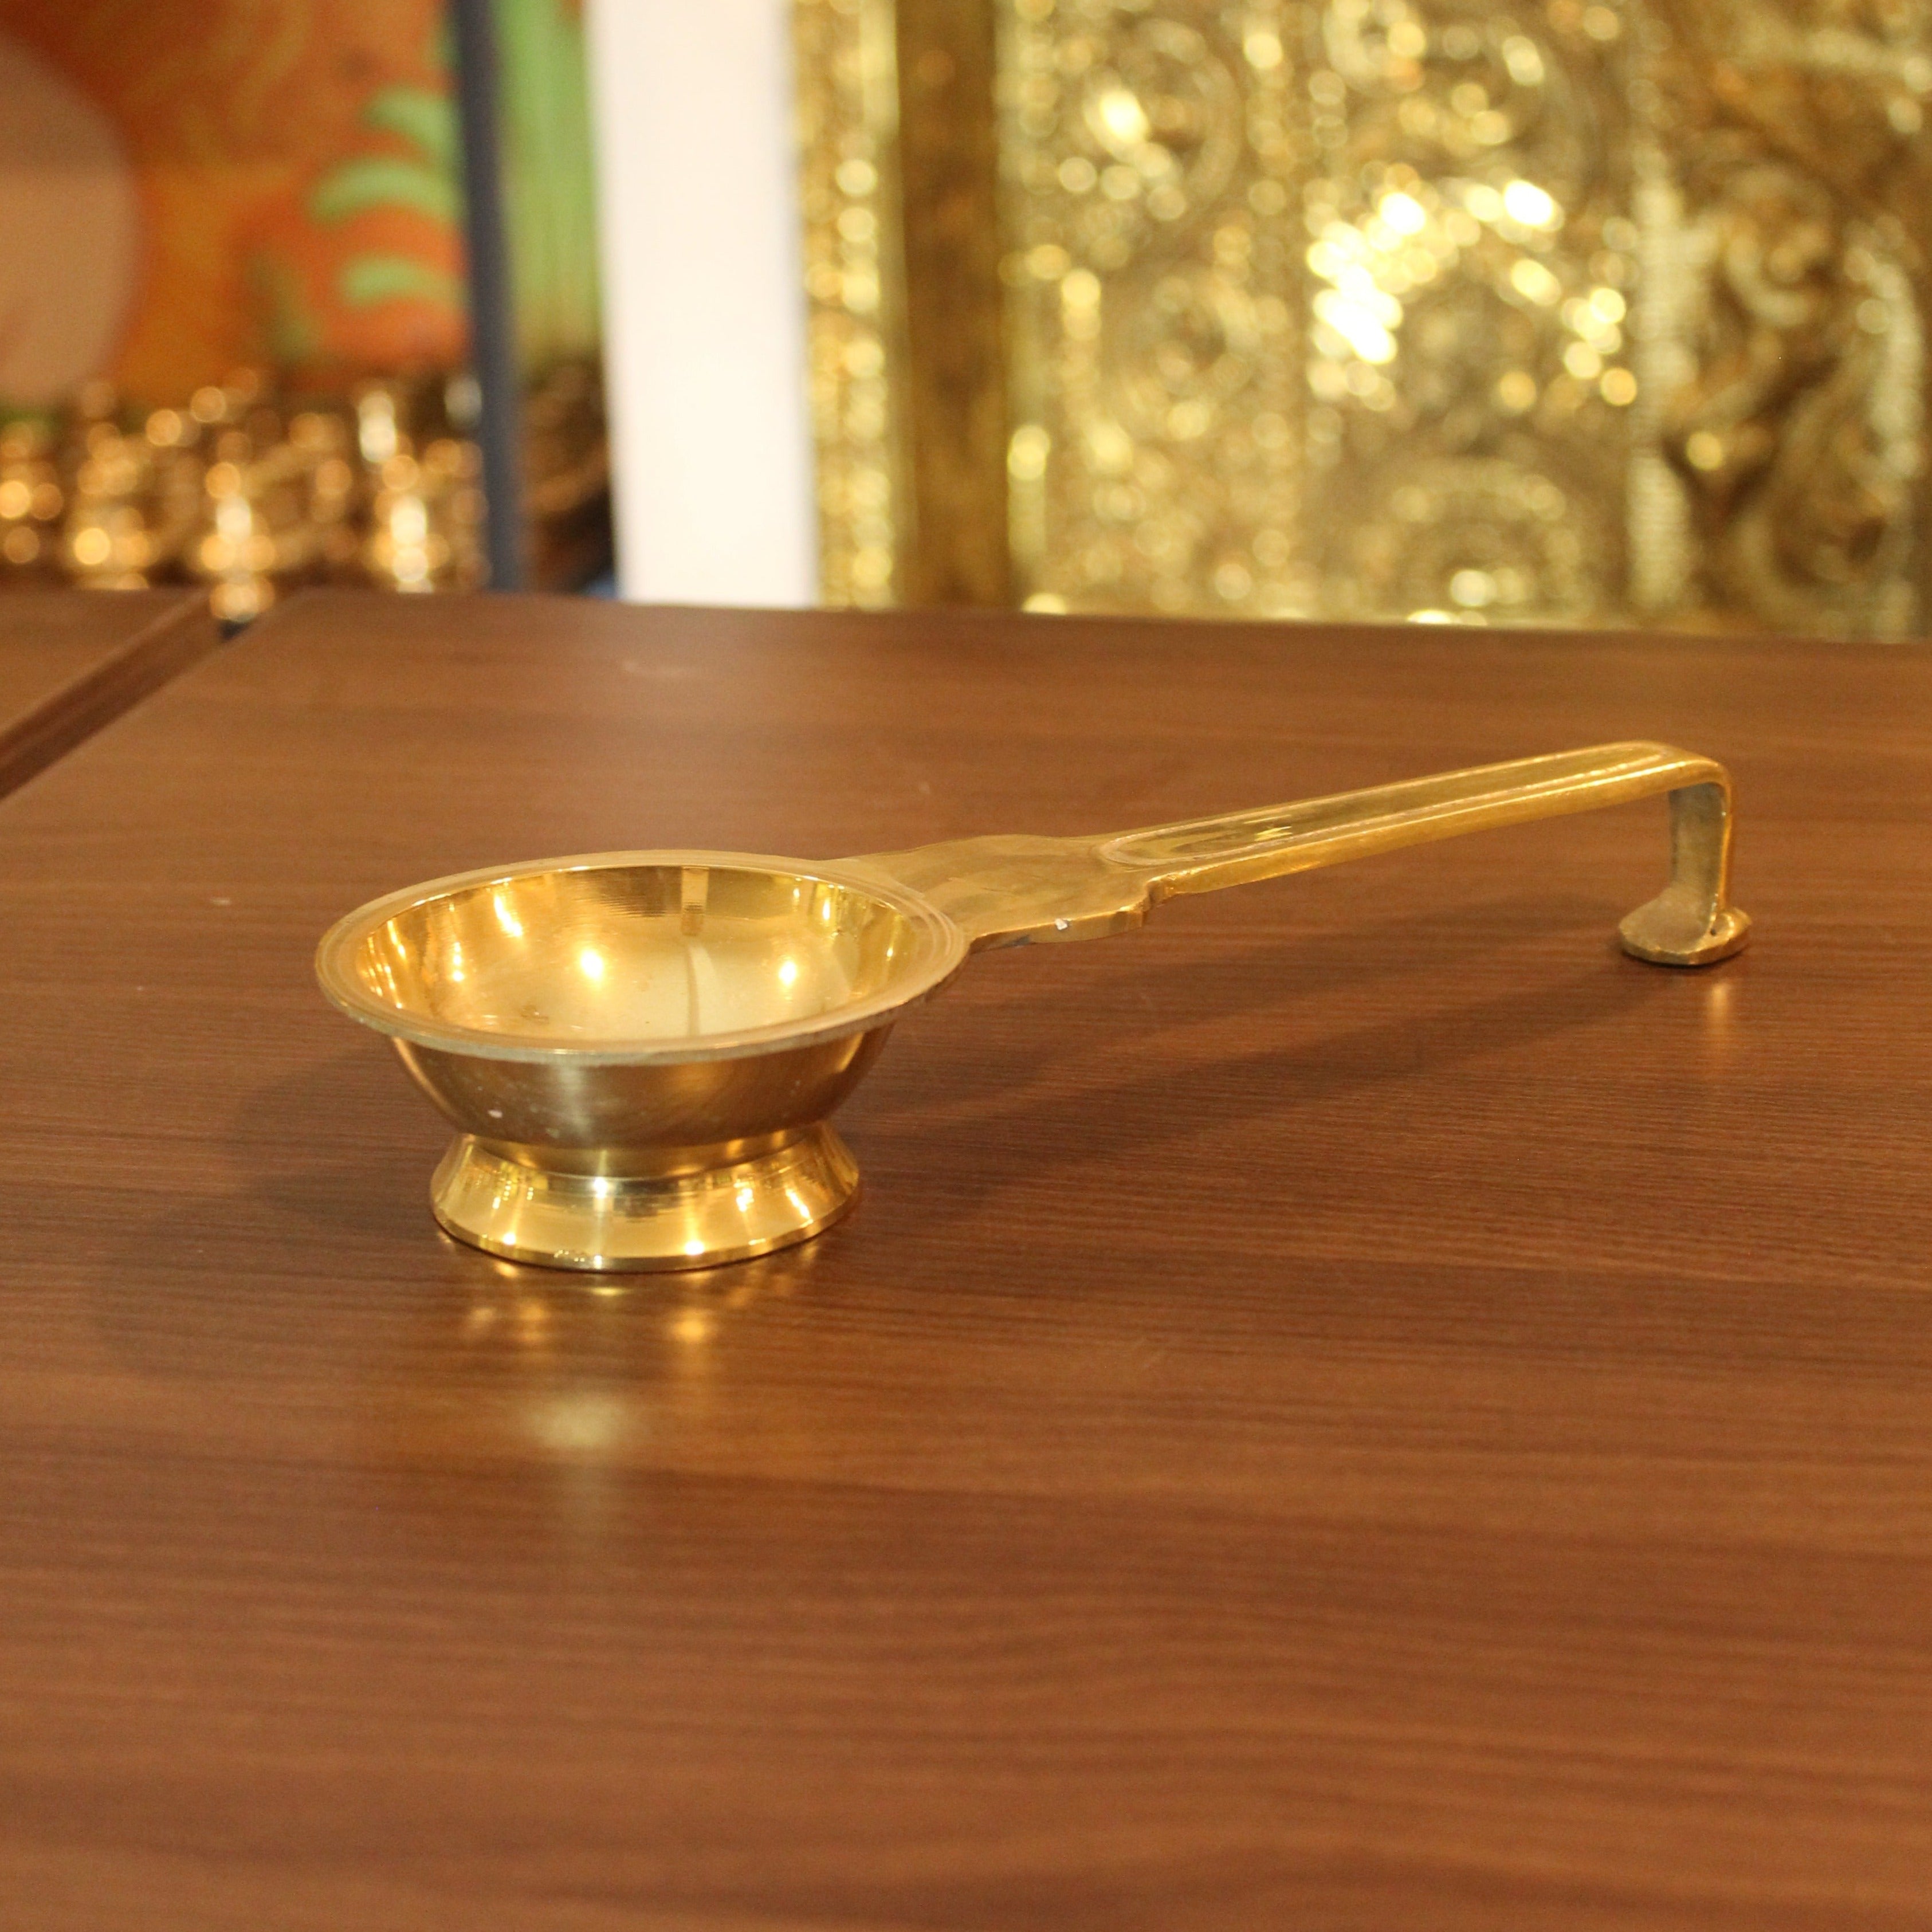 Brass Dhoop Arathi - Premium Brass from Cherakulam Vessels & Crockery - Just Rs. 617! Shop now at Cherakulam Vessels & Crockery